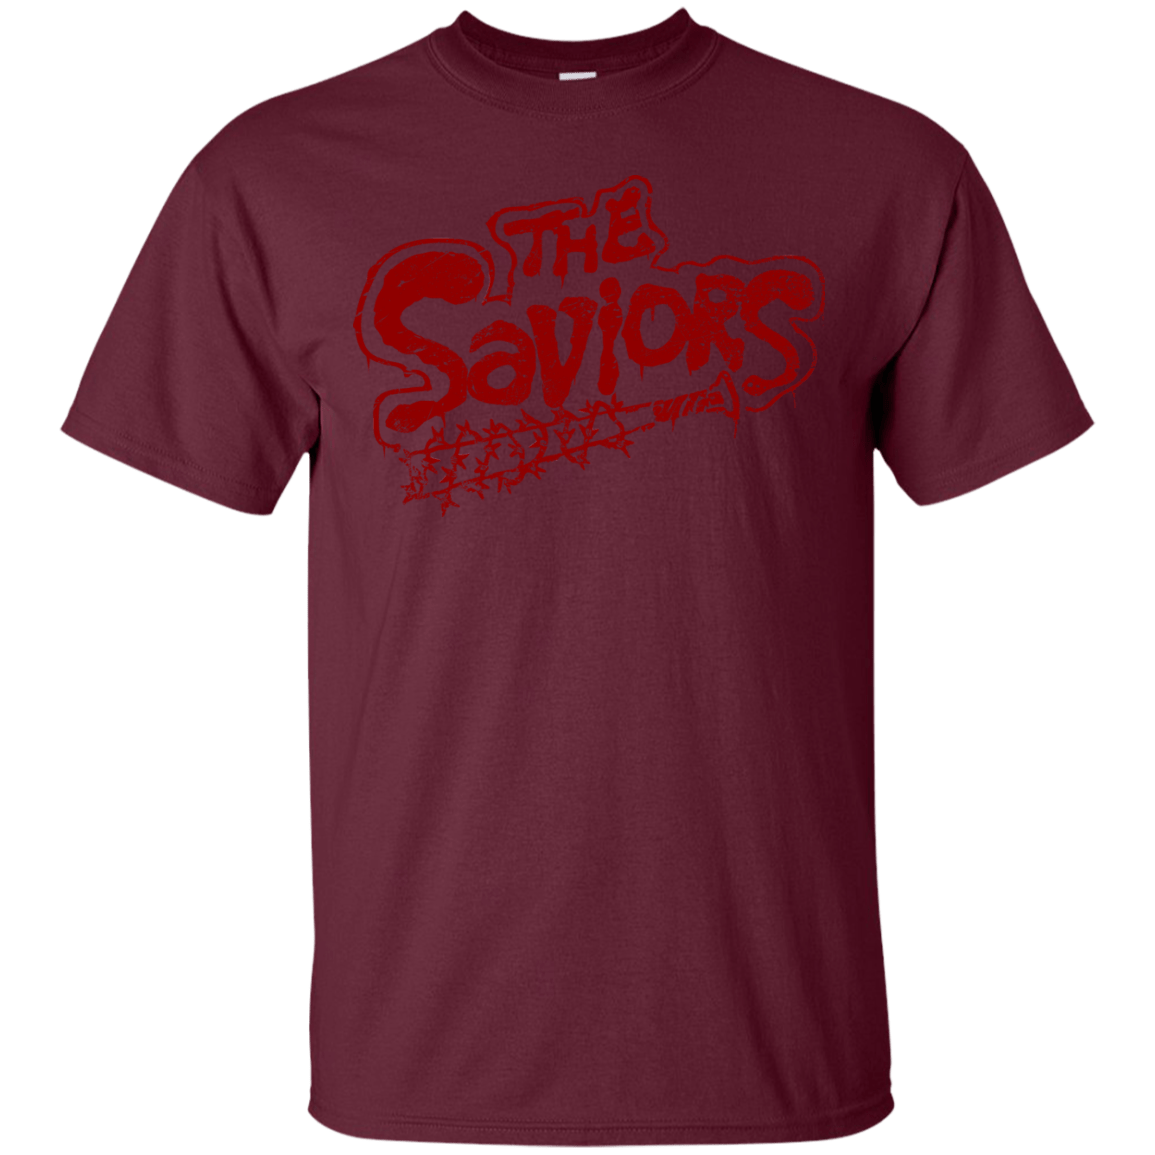 T-Shirts Maroon / Small The Saviors T-Shirt